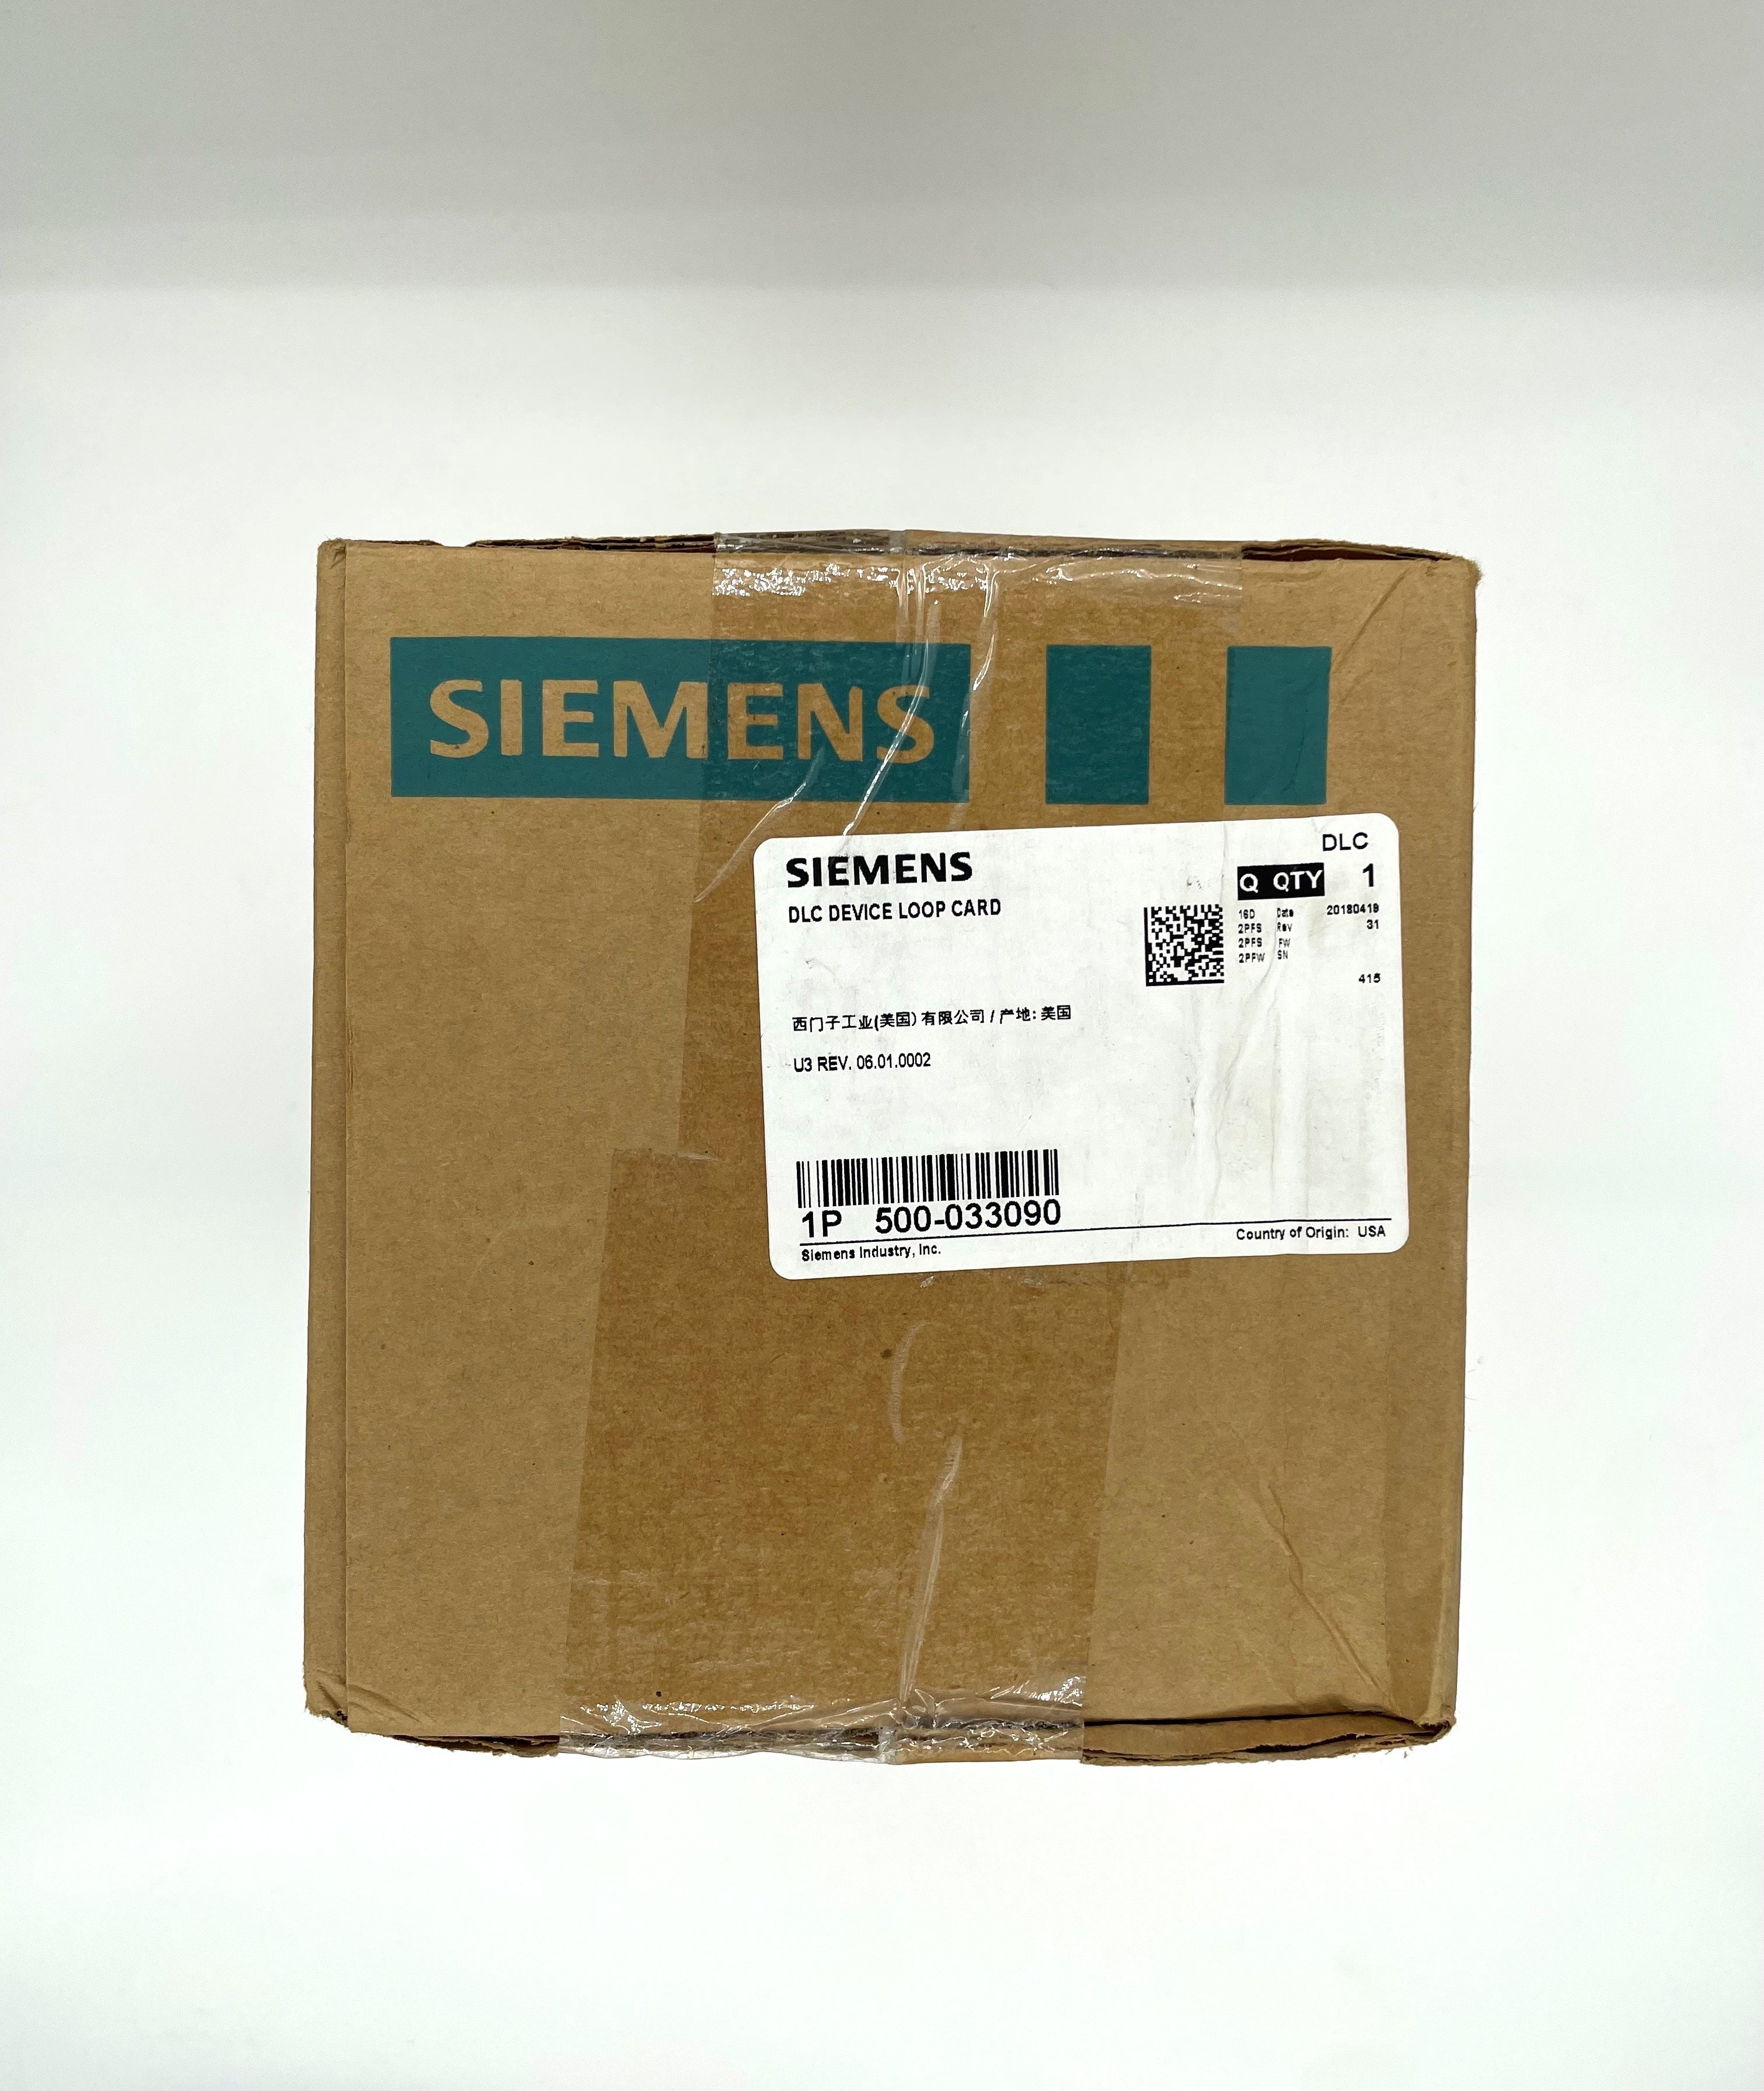 Siemens DLC